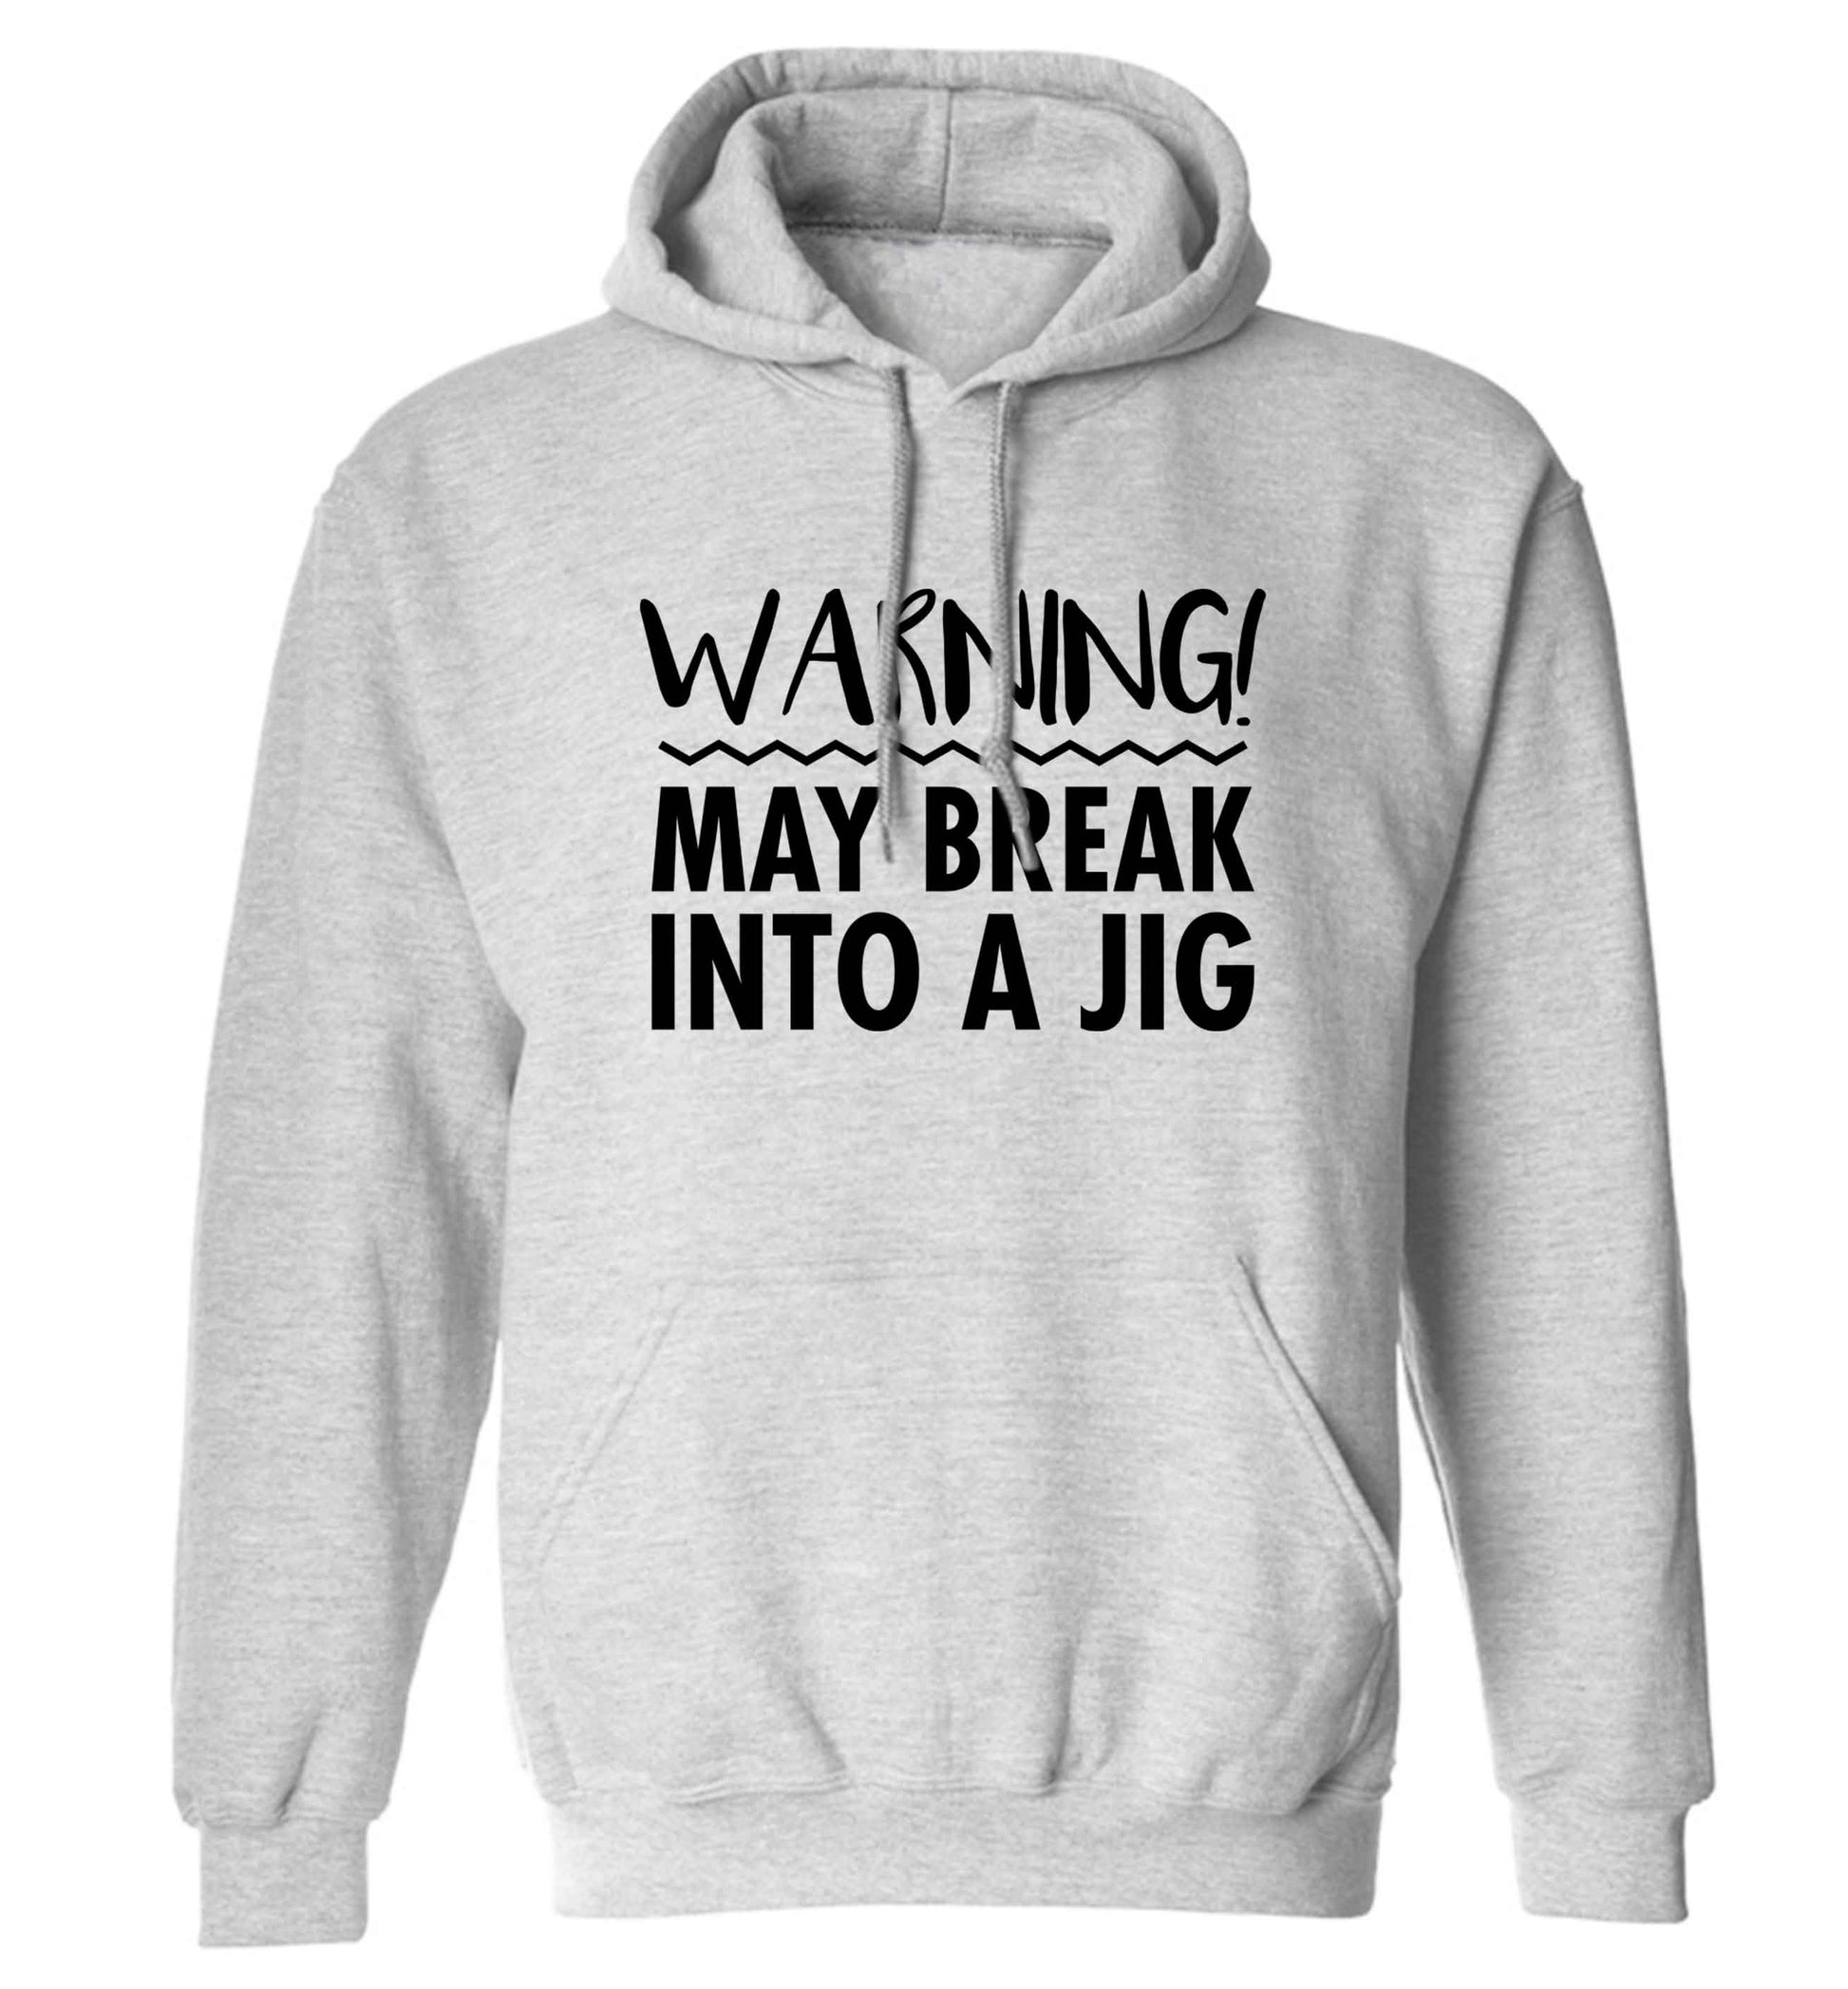 Warning may break into a jig adults unisex grey hoodie 2XL